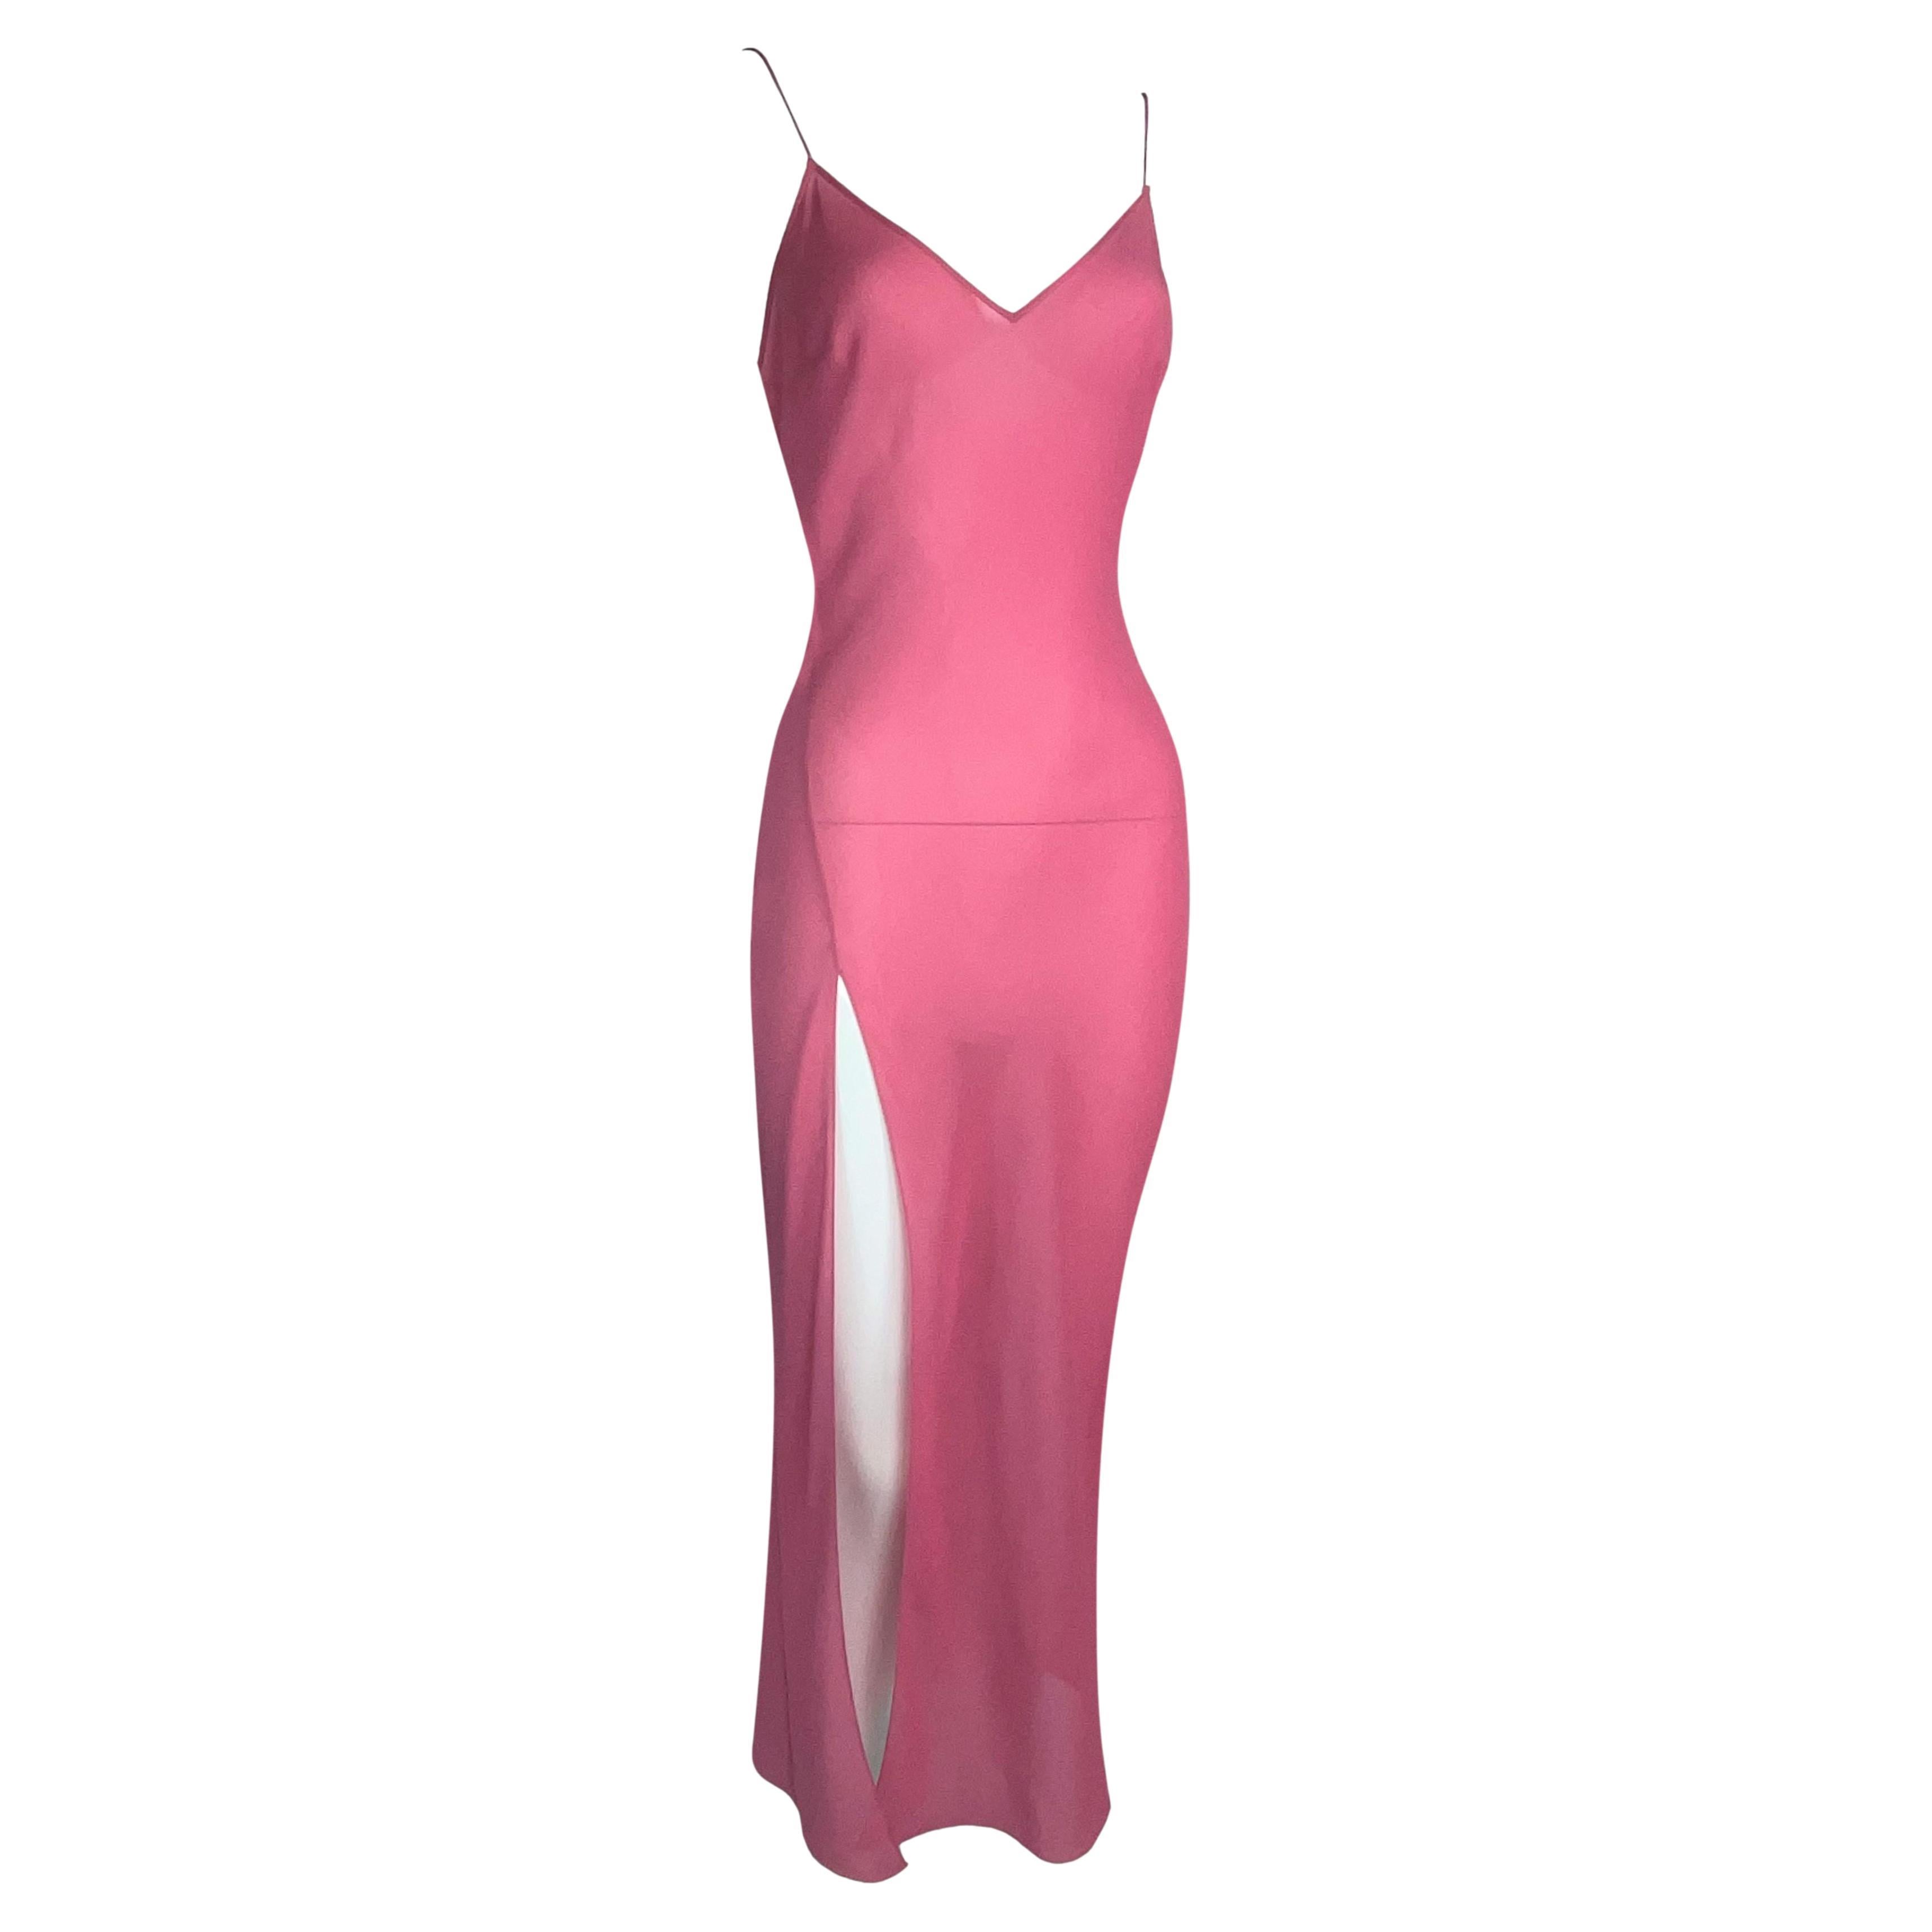 S/S 2002 Christian Dior John Galliano Rihanna Sheer Pink Silk High Slit Dress